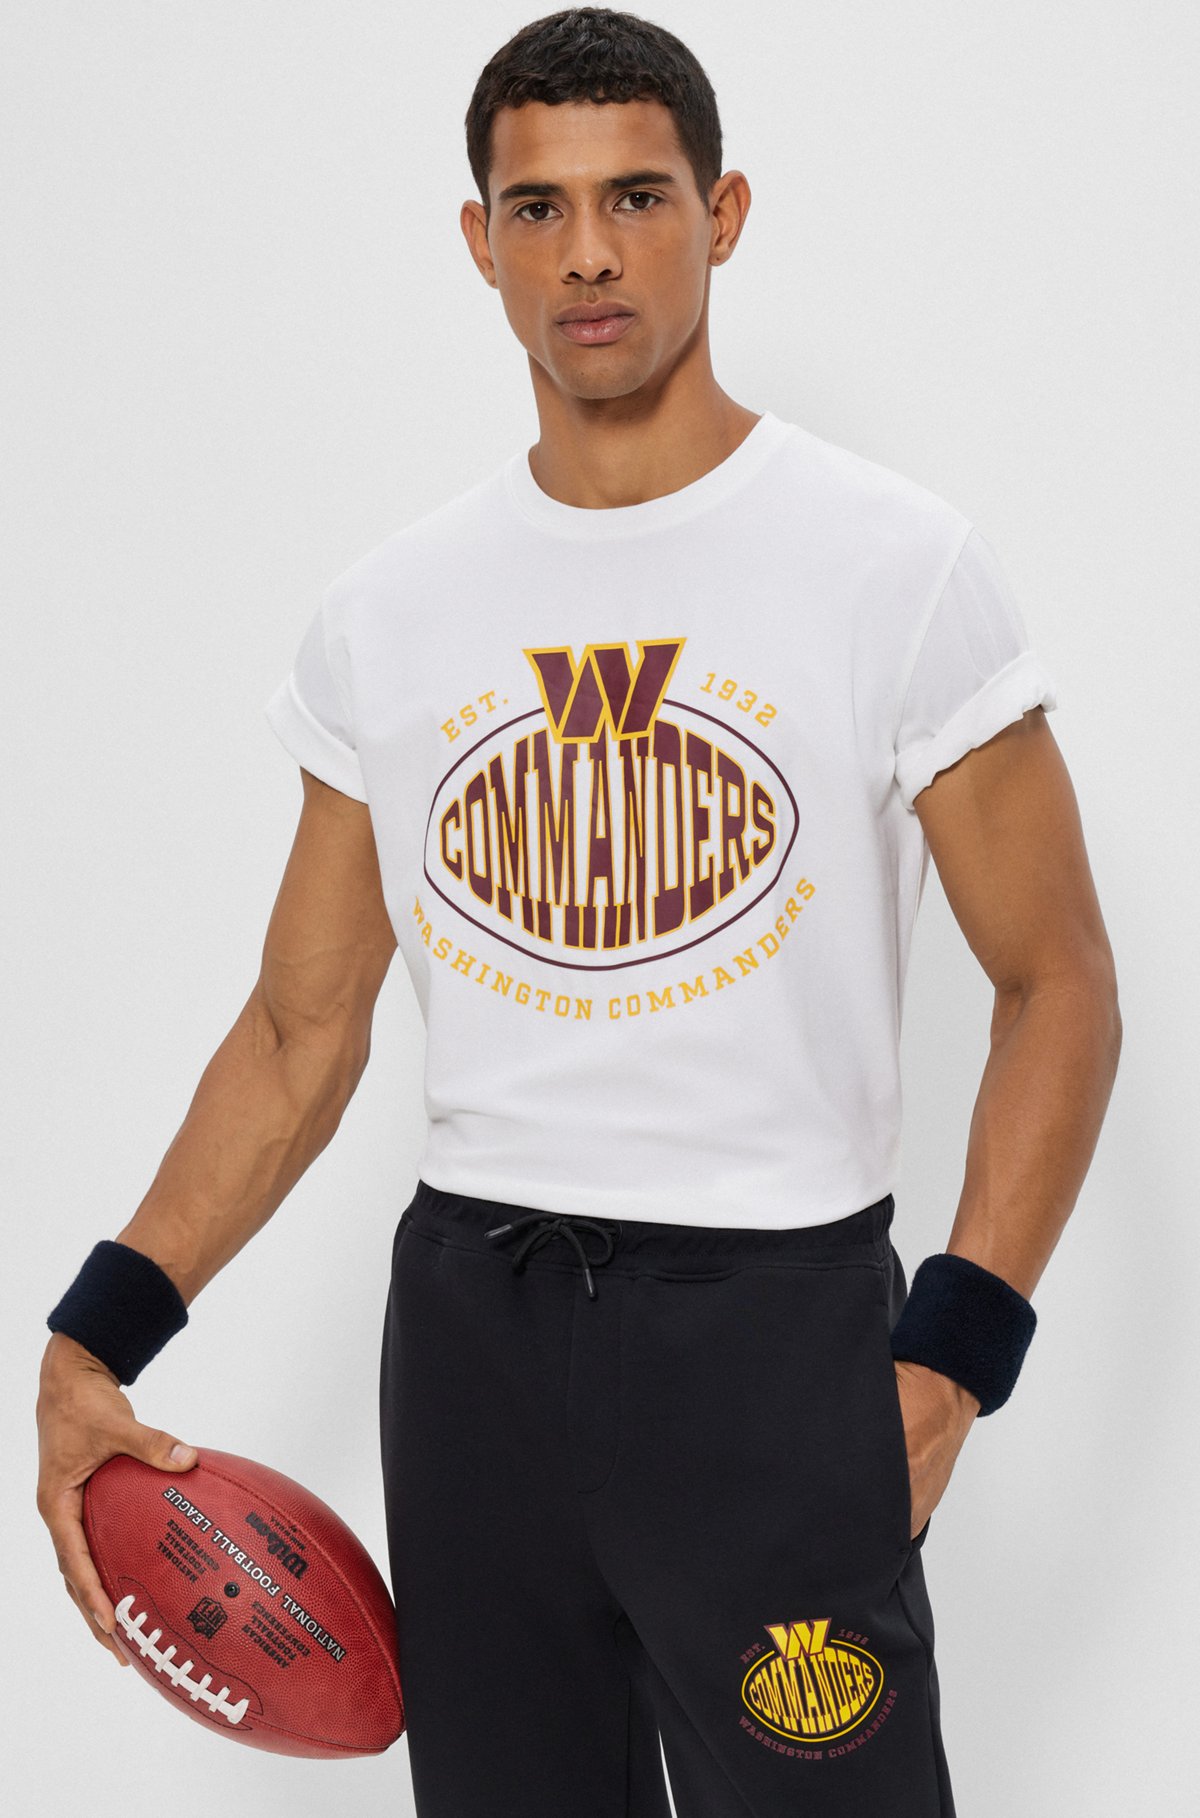  T-shirt en coton stretch BOSS x NFL avec logo du partenariat, Commanders